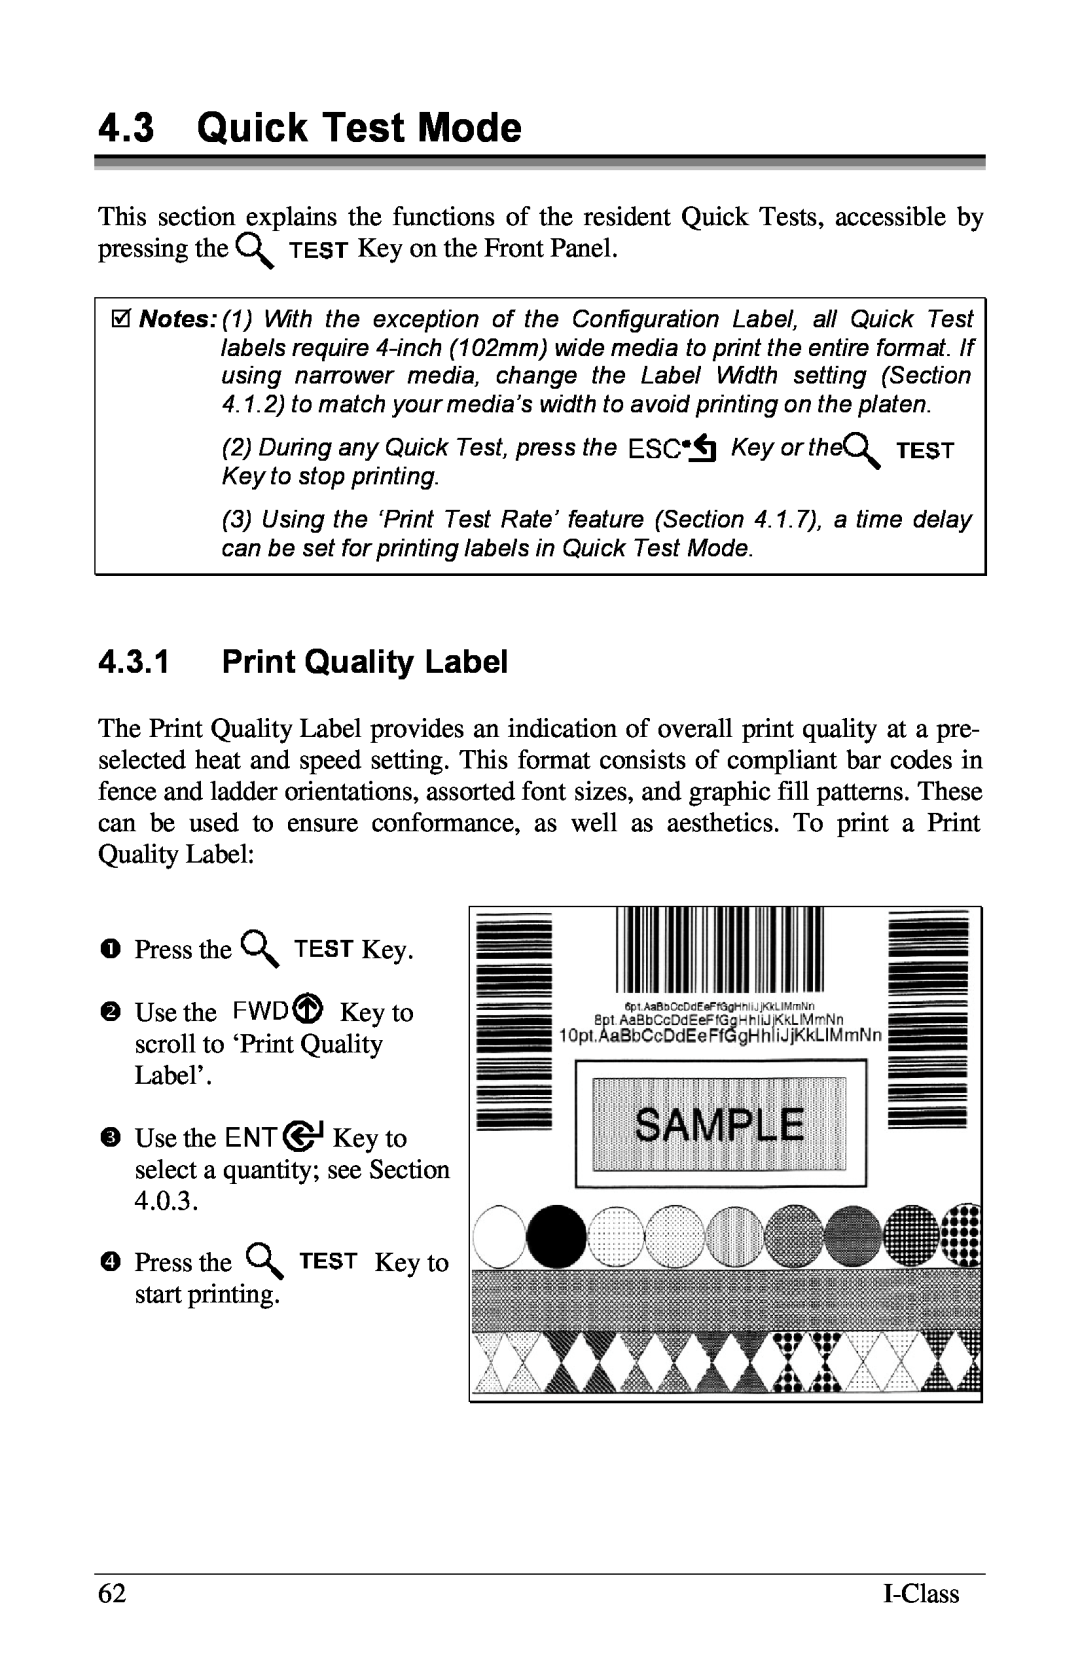 Xerox I Class manual 4.3Quick Test Mode, 4.3.1Print Quality Label 